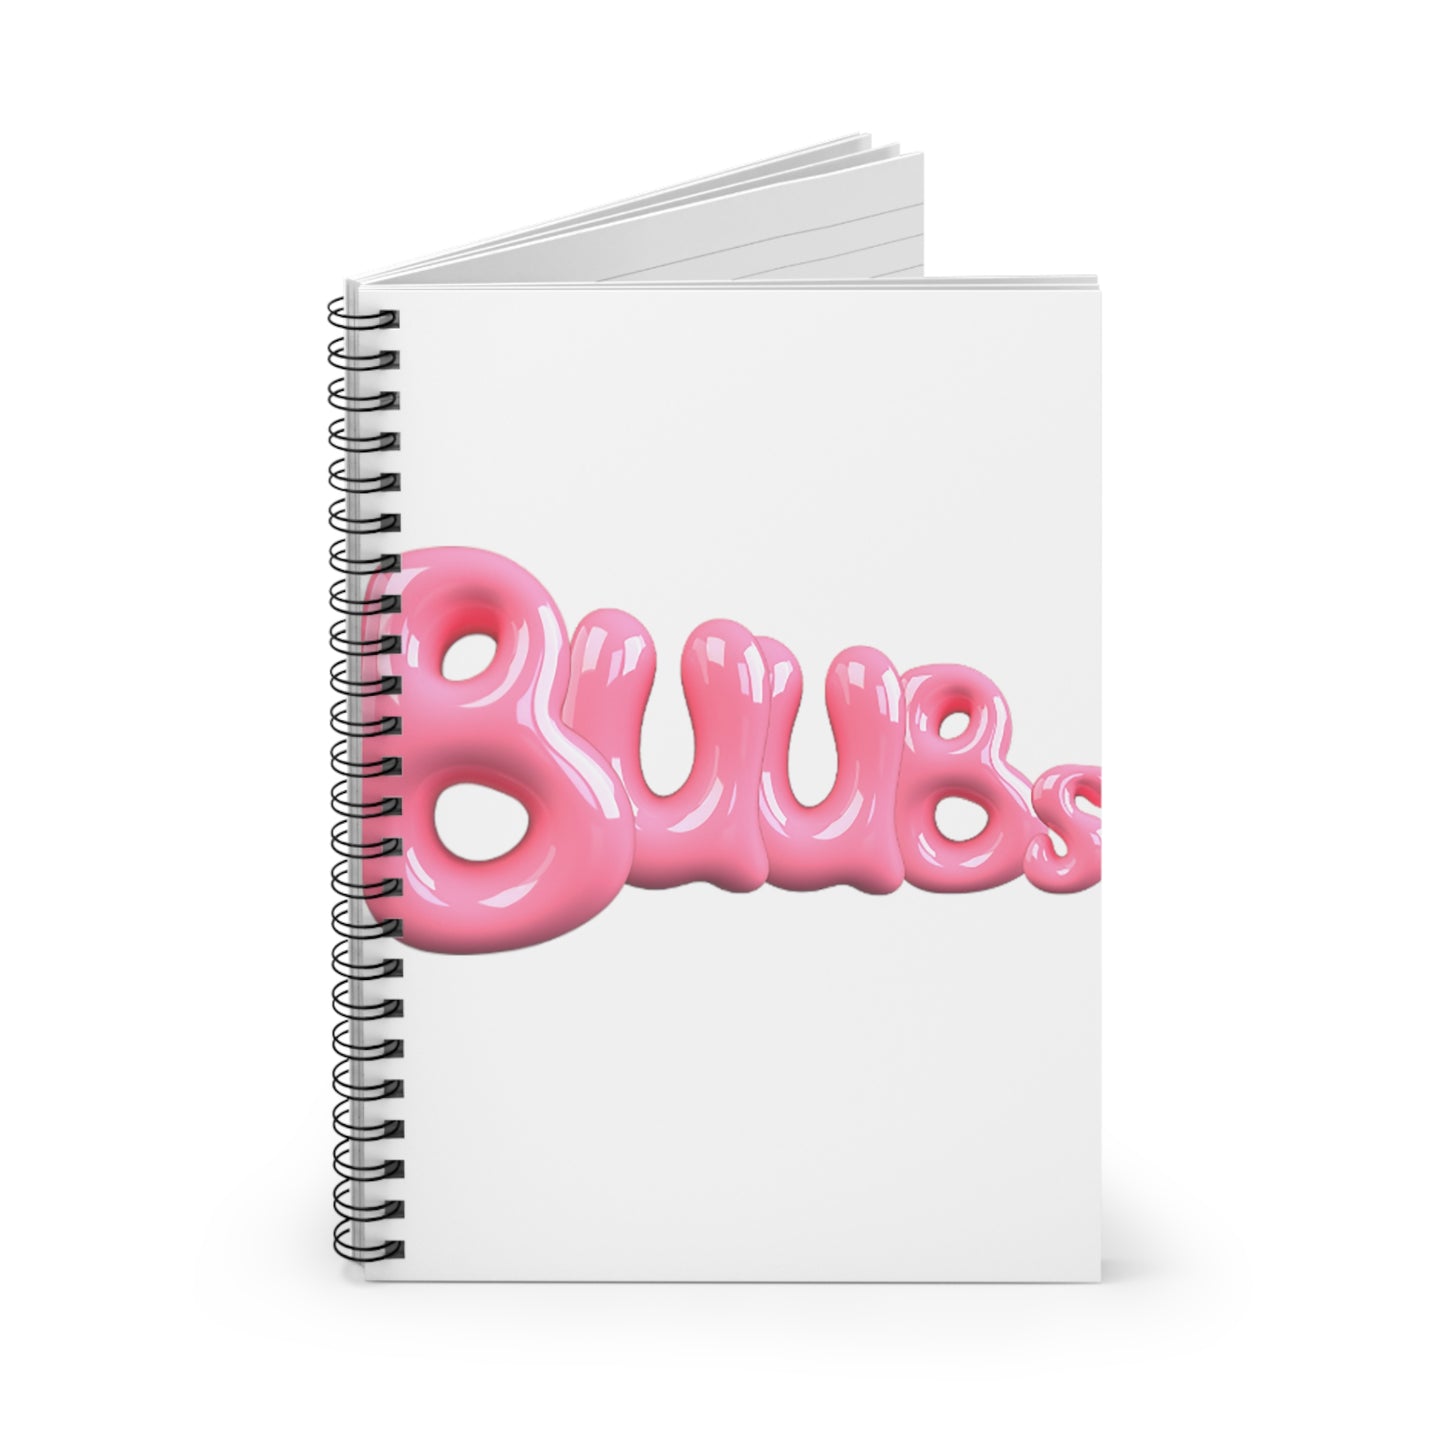 Juucie | "Buubs" Spiral Notebook - Ruled Line - Juucie